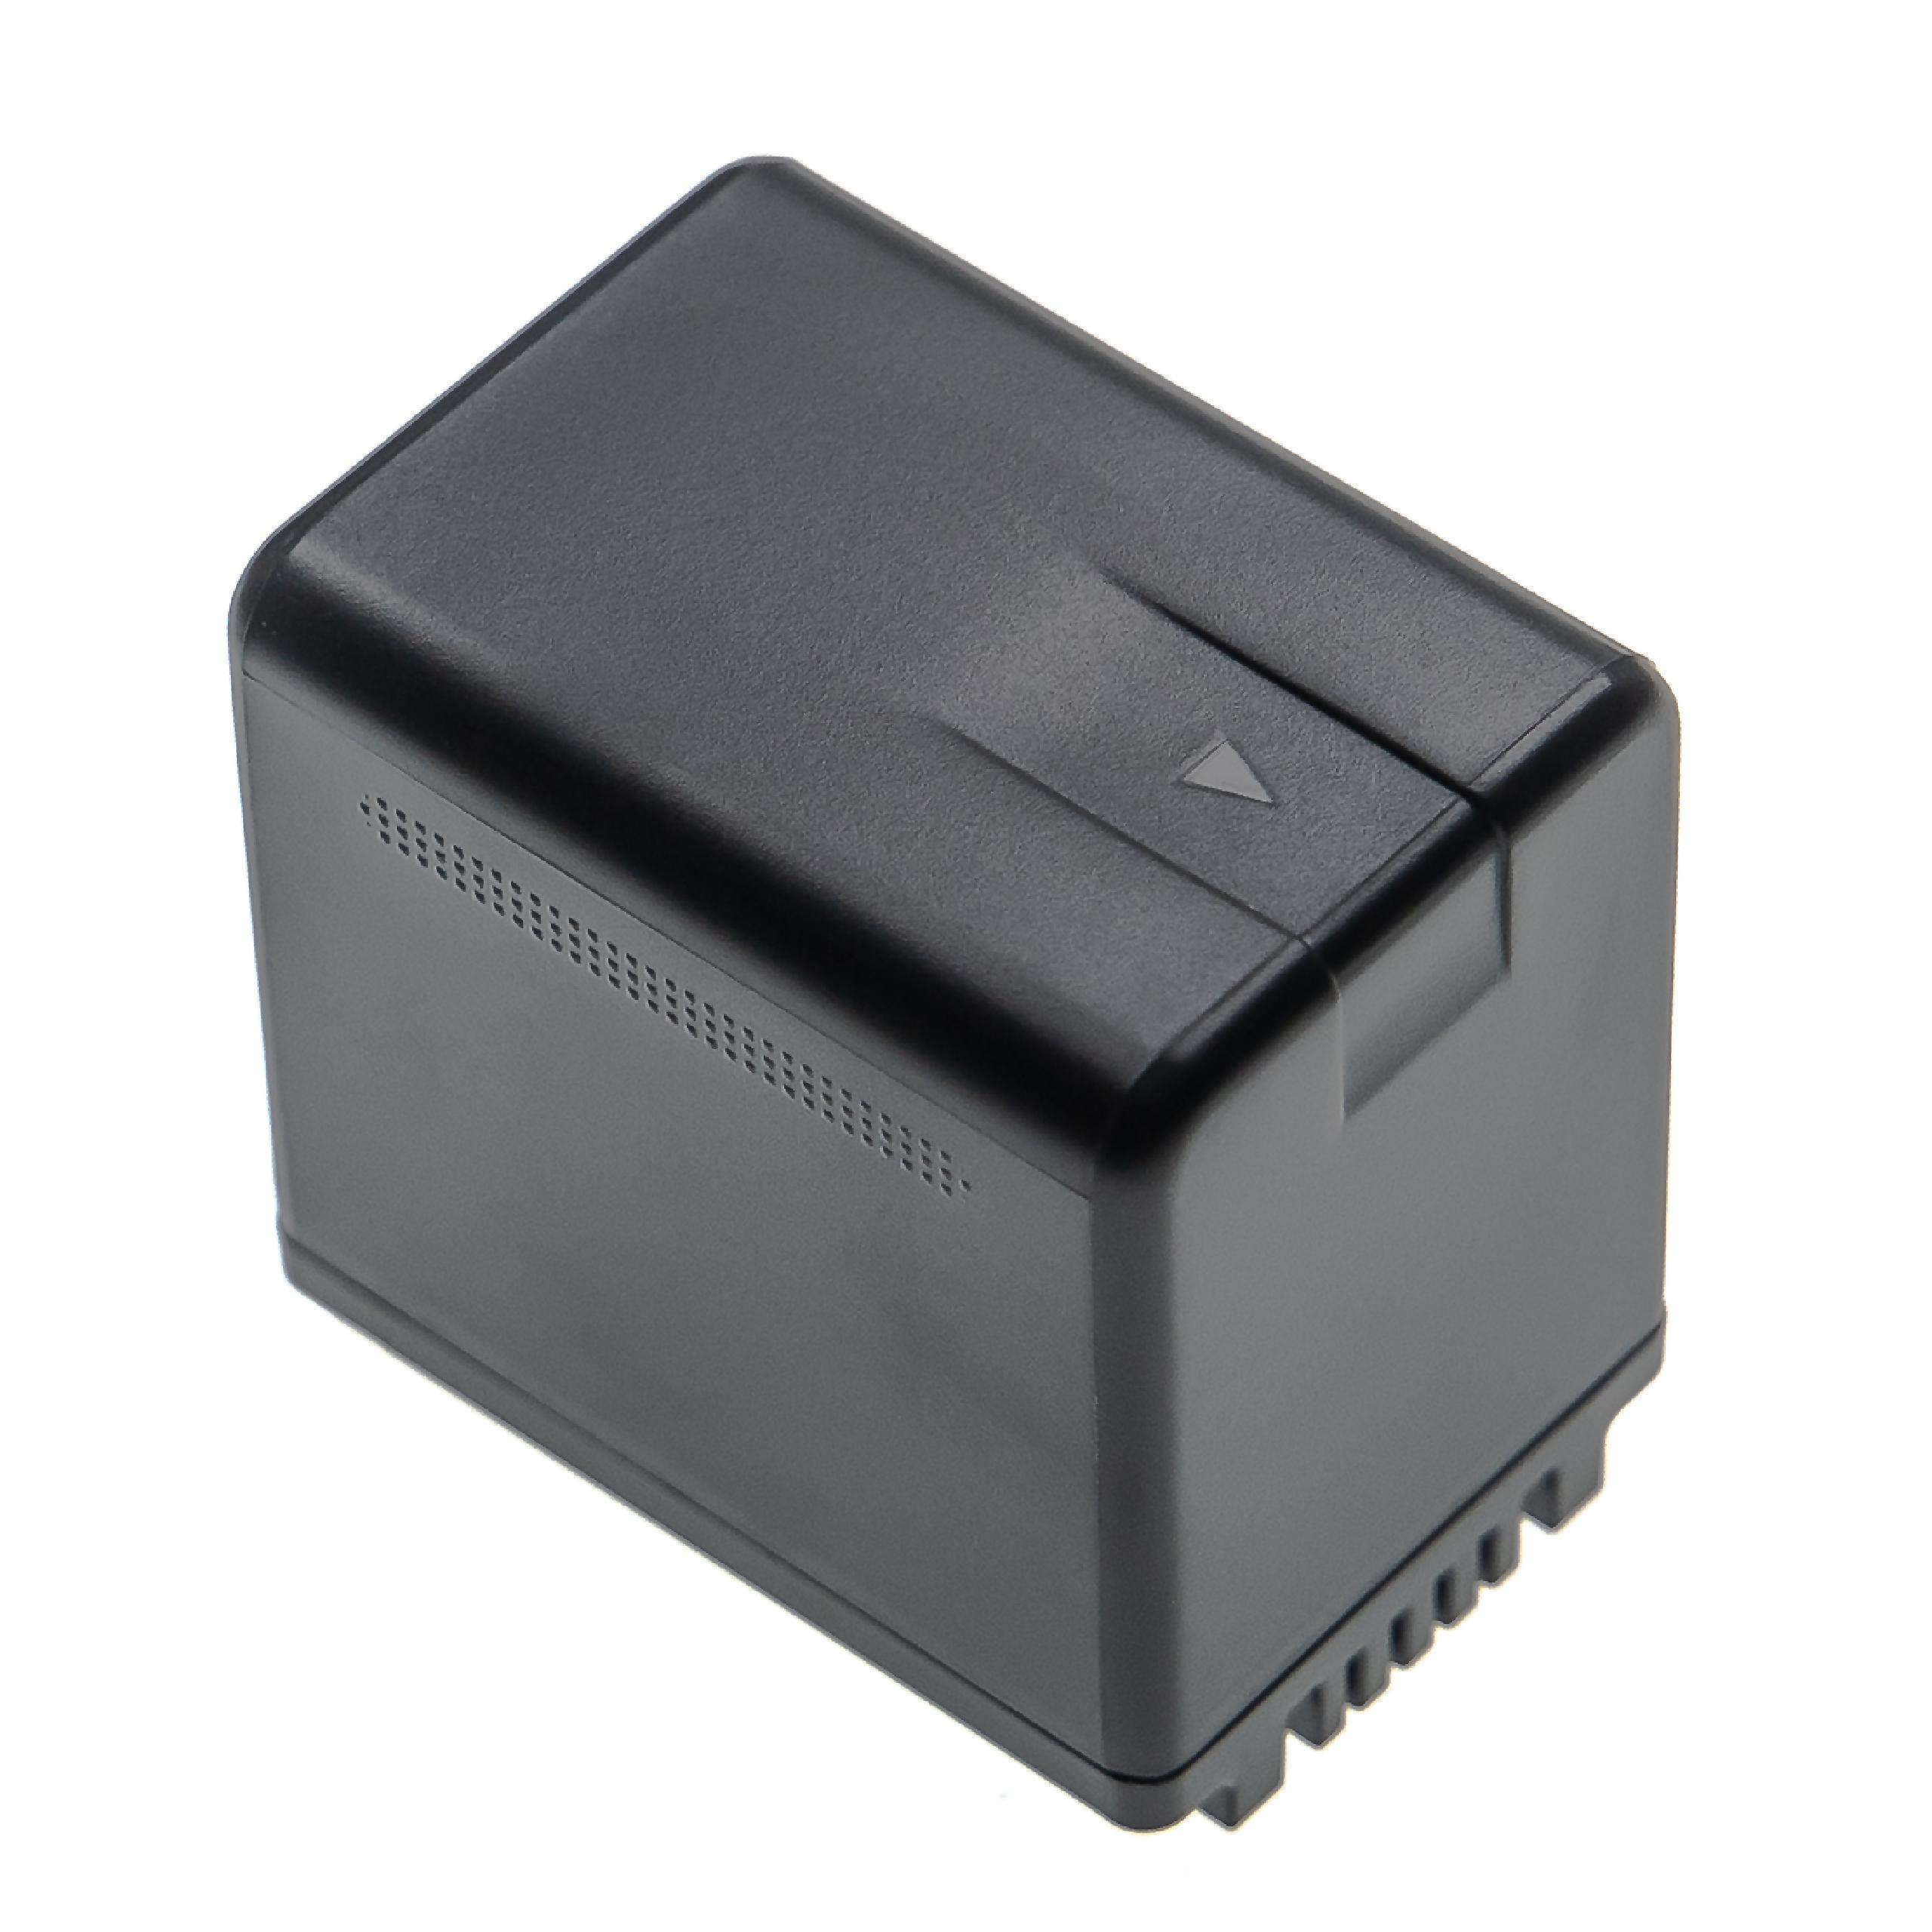 Videocamera Battery Replacement for Panasonic VW-VBK180, VW-VBK360, VW-VBT380, VW-VBT190 - 3400mAh 3.6V Li-Ion